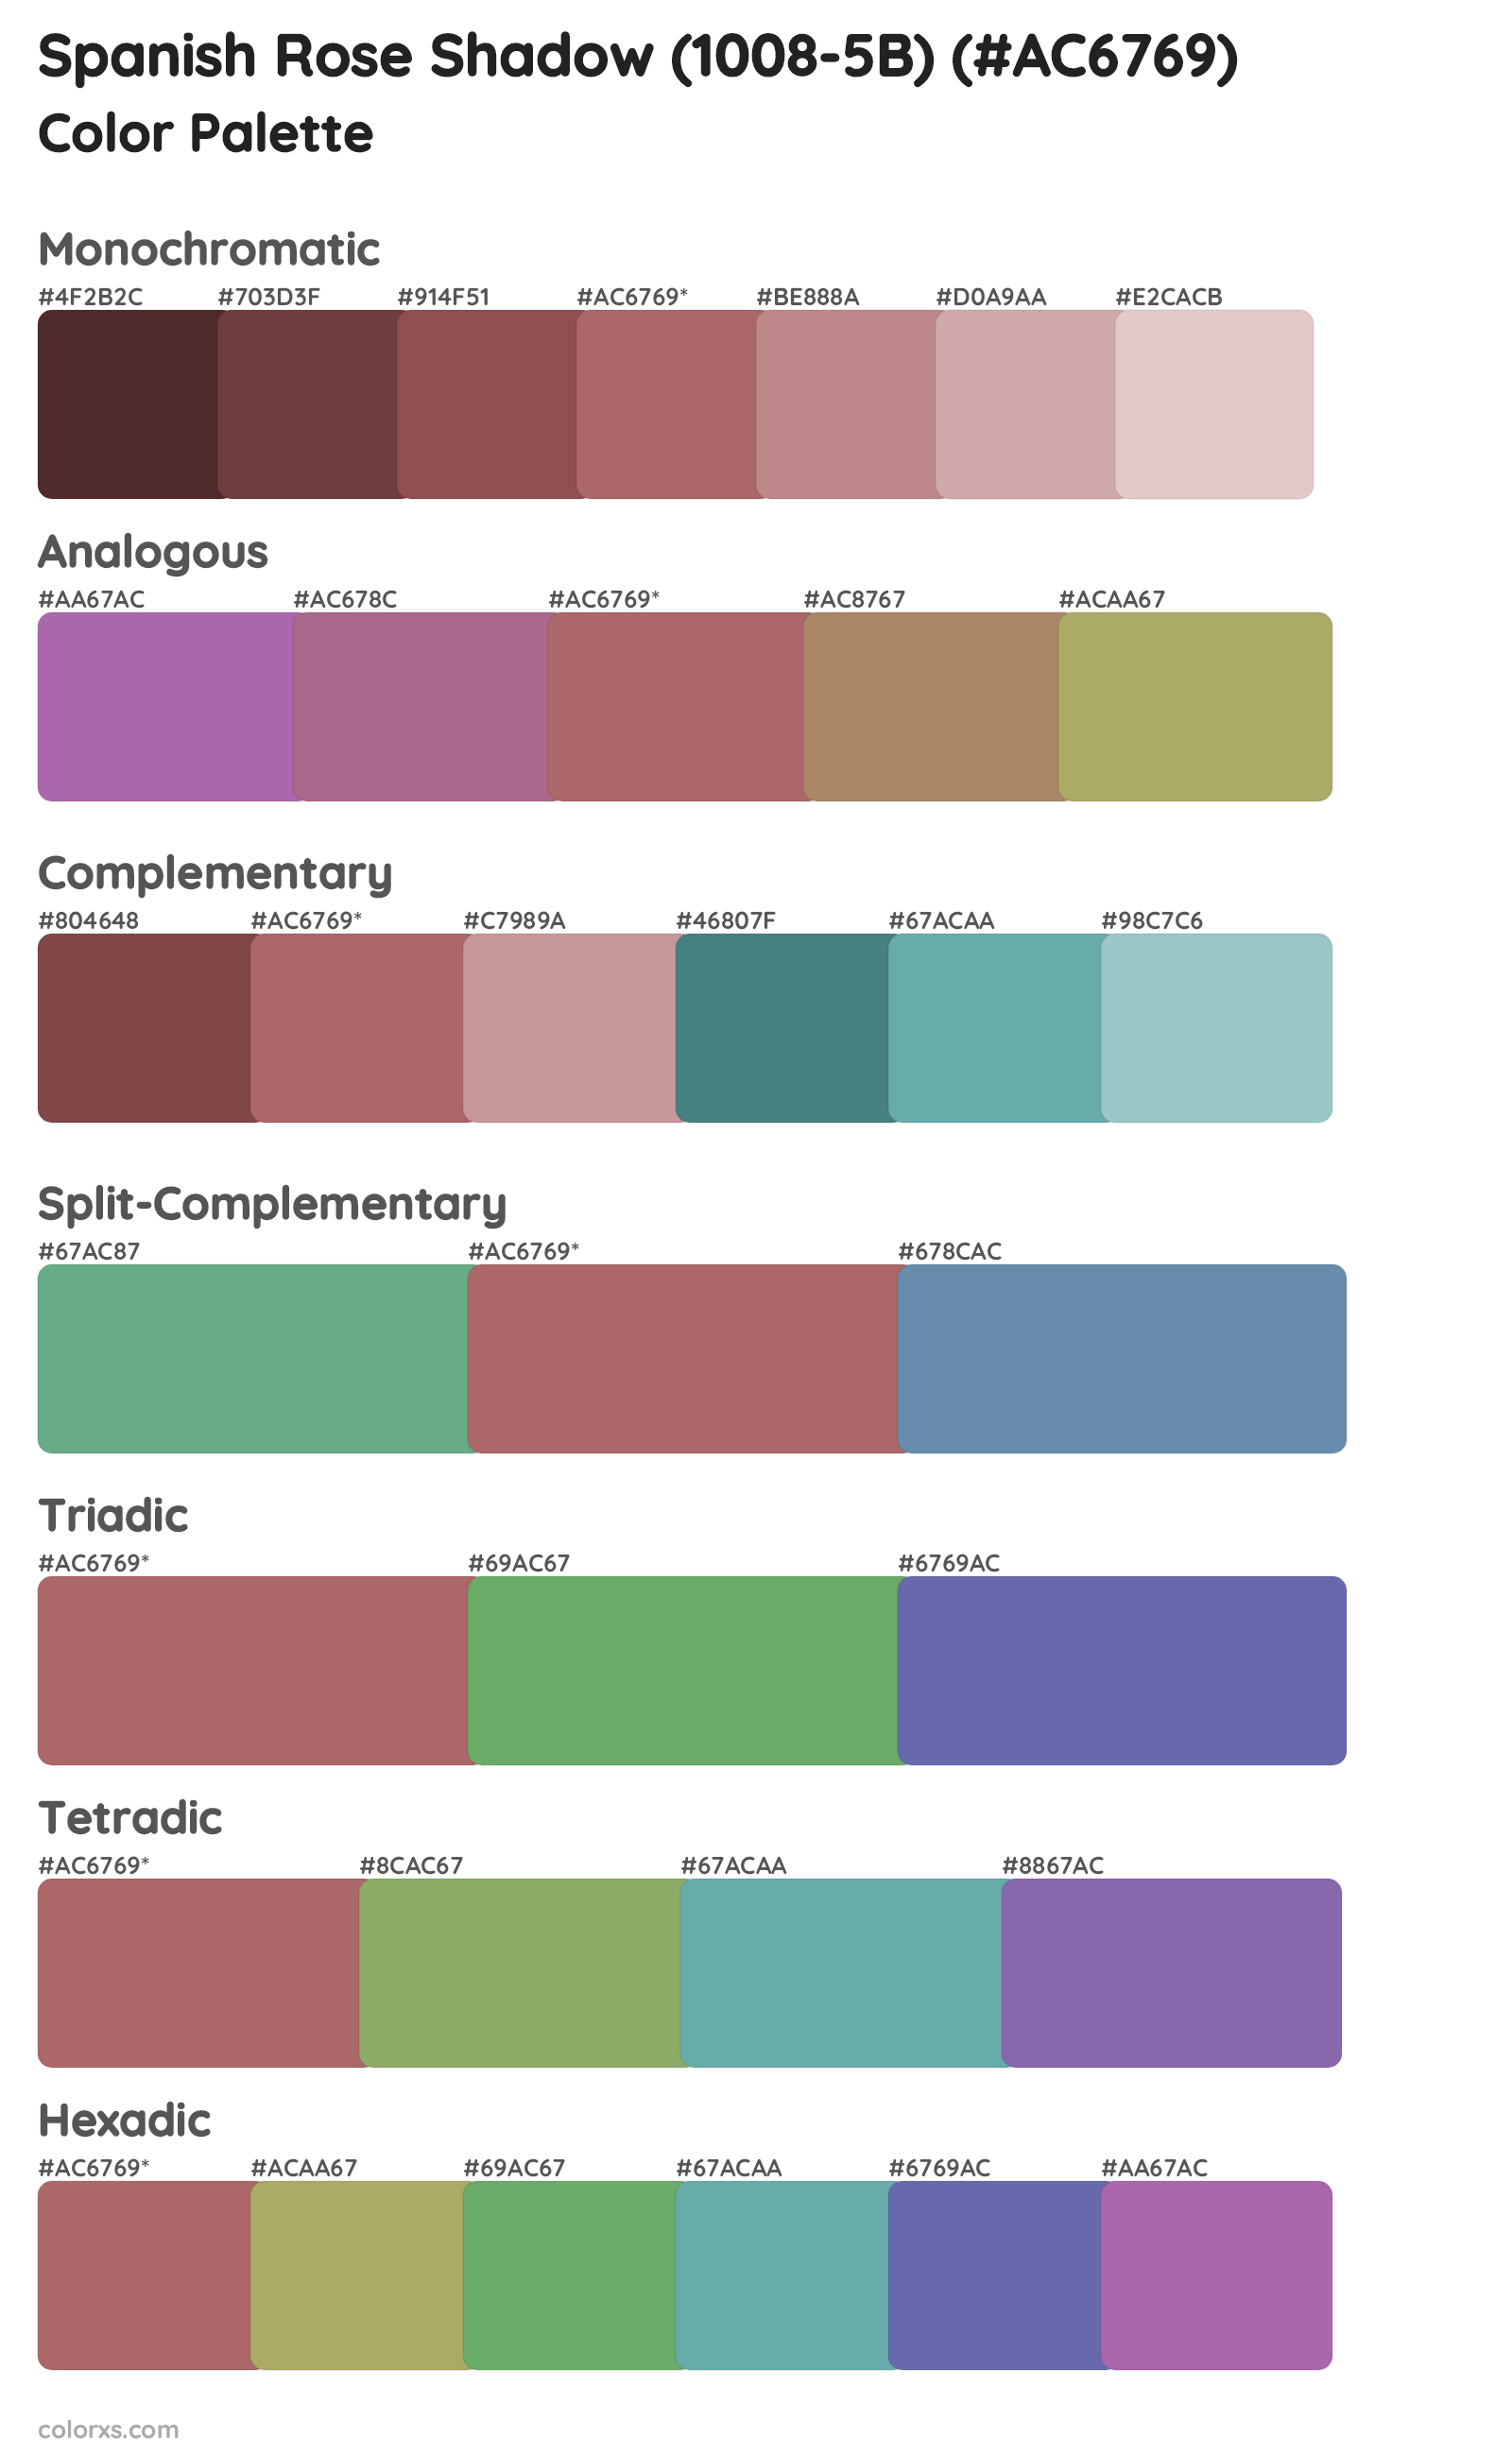 Spanish Rose Shadow (1008-5B) Color Scheme Palettes